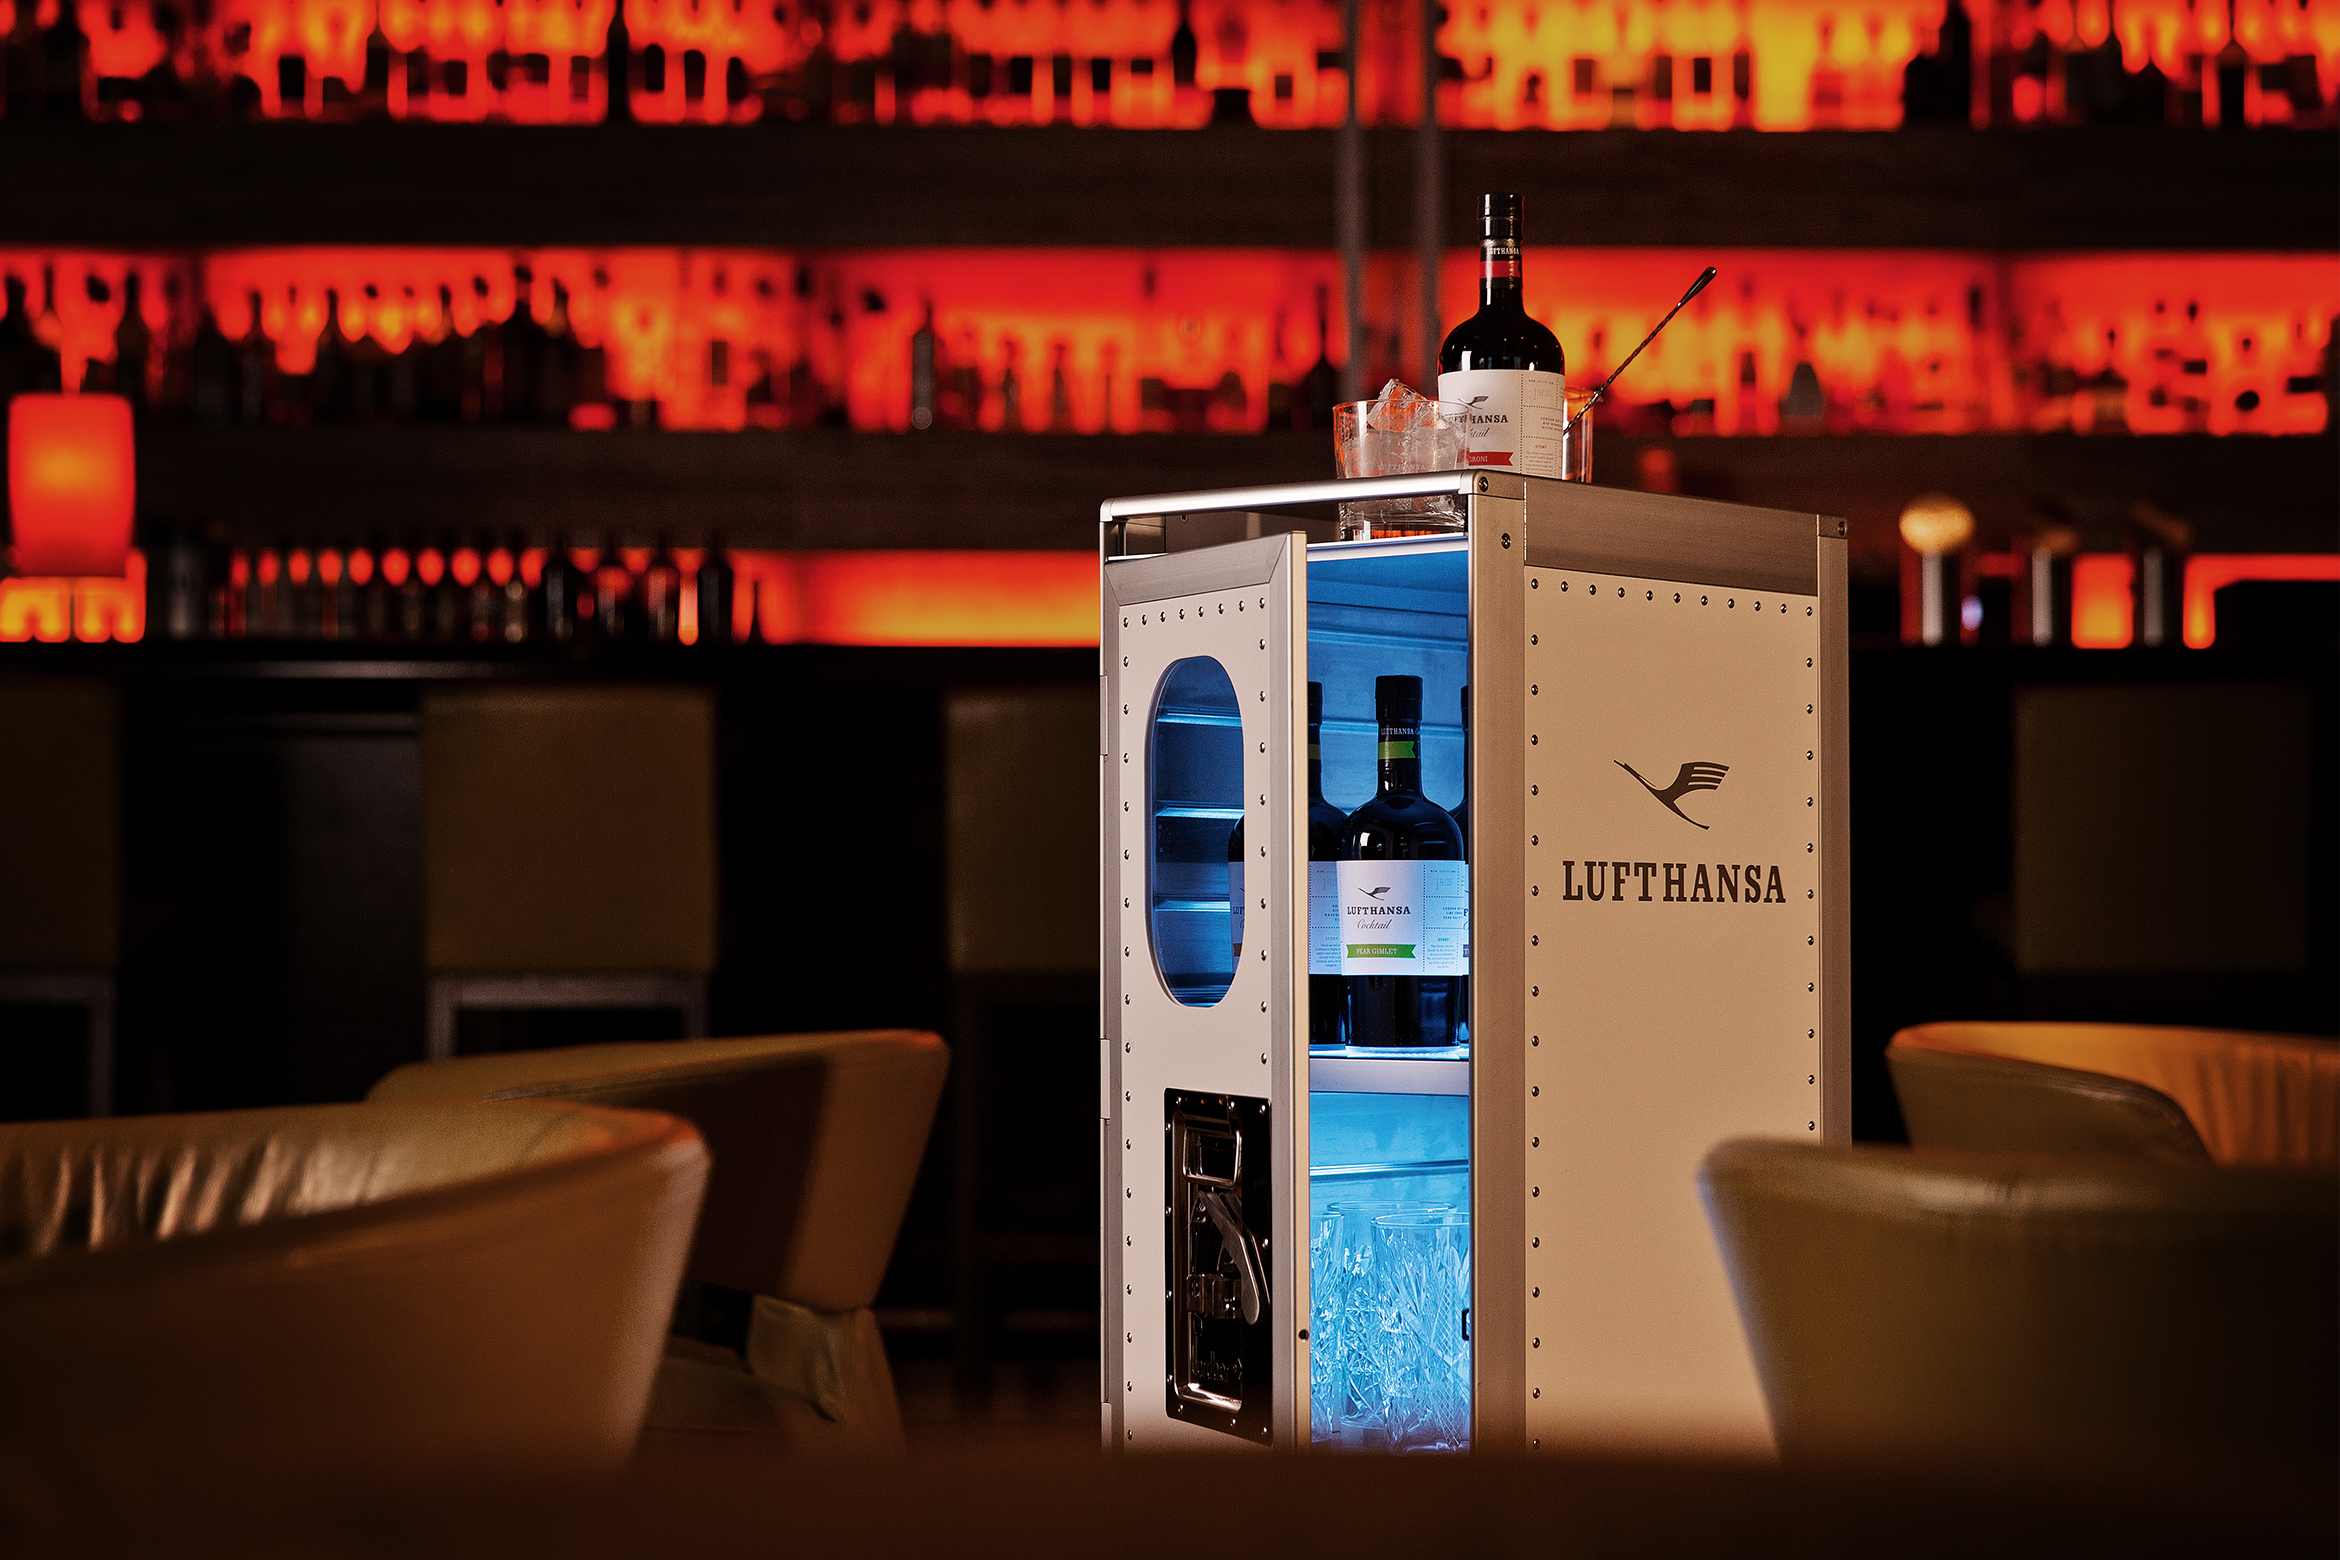 Lufthansa Cocktail bar equipment